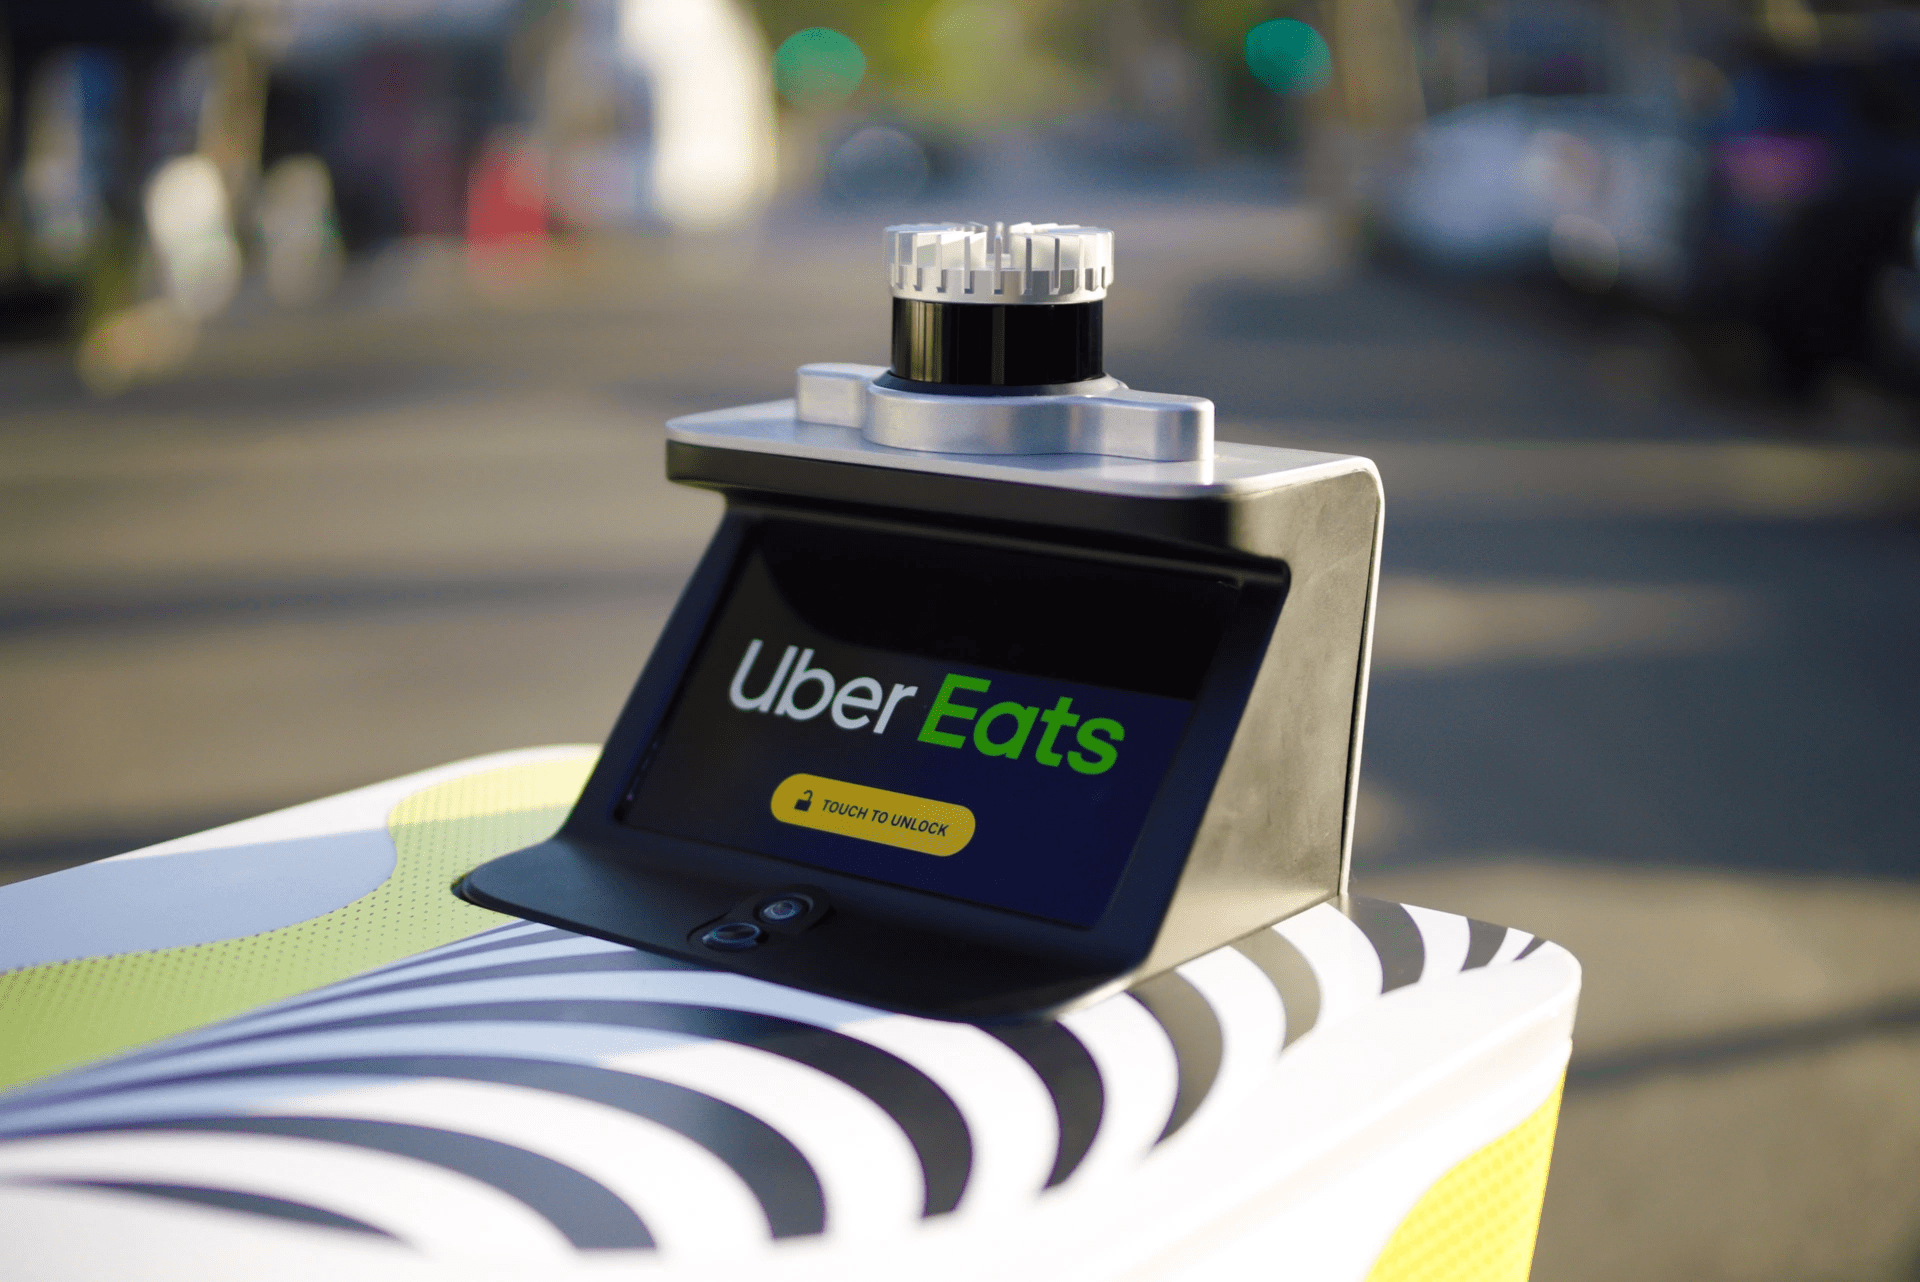 Uber Eats sperimenta consegne autonome con Serve Robotics e Motional